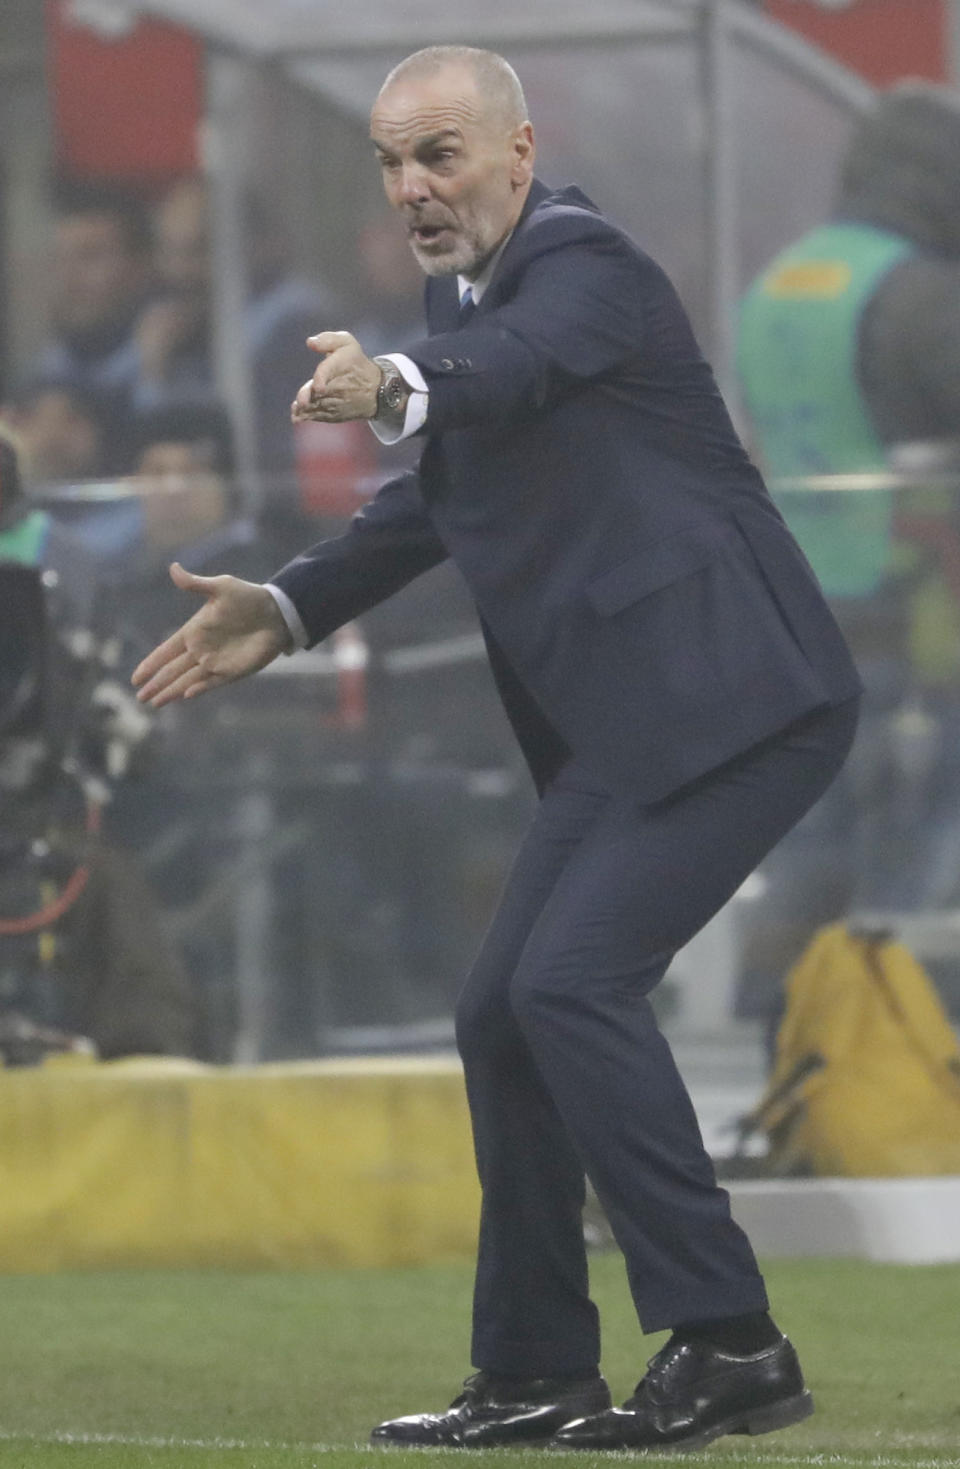 Inter Milan coach Stefano Pioli gestures during an Italian Cup quarterfinal soccer match between Inter Milan and Lazio, at the San Siro stadium in Milan, Italy, Tuesday, Jan. 31, 2017. (AP Photo/Luca Bruno)